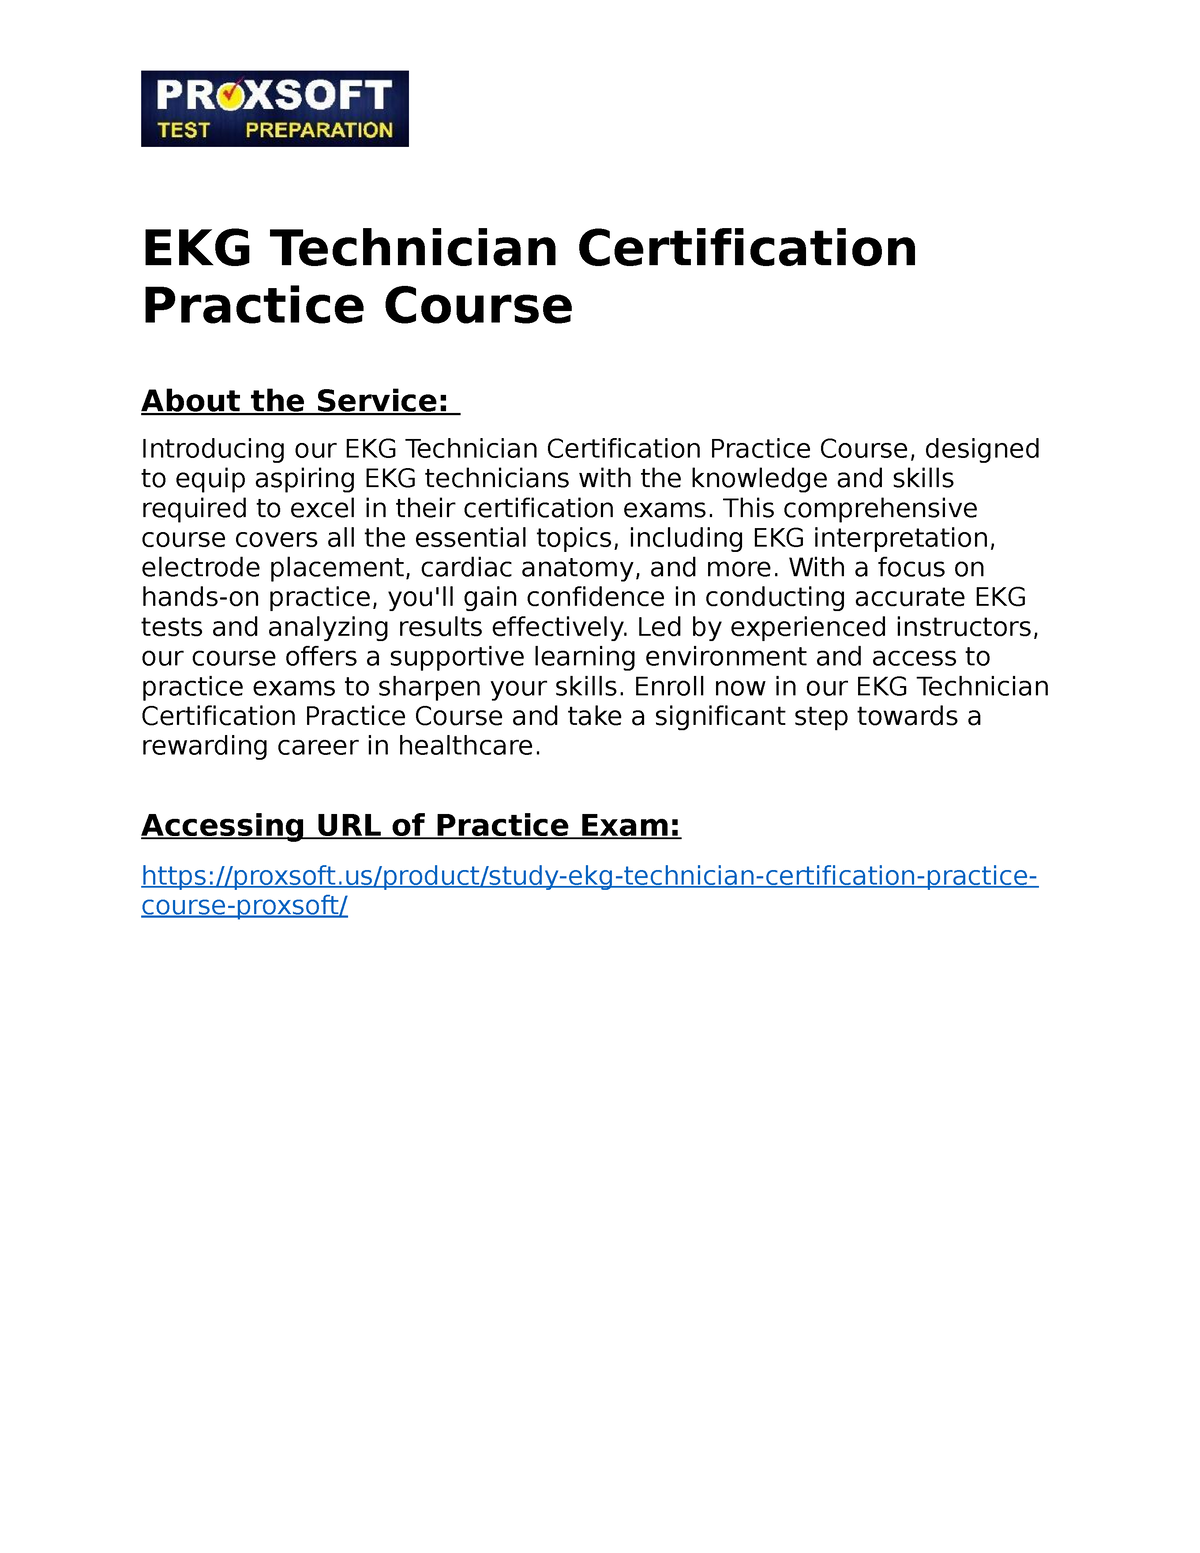 EKG Technician Certification Practice Course This comprehensive